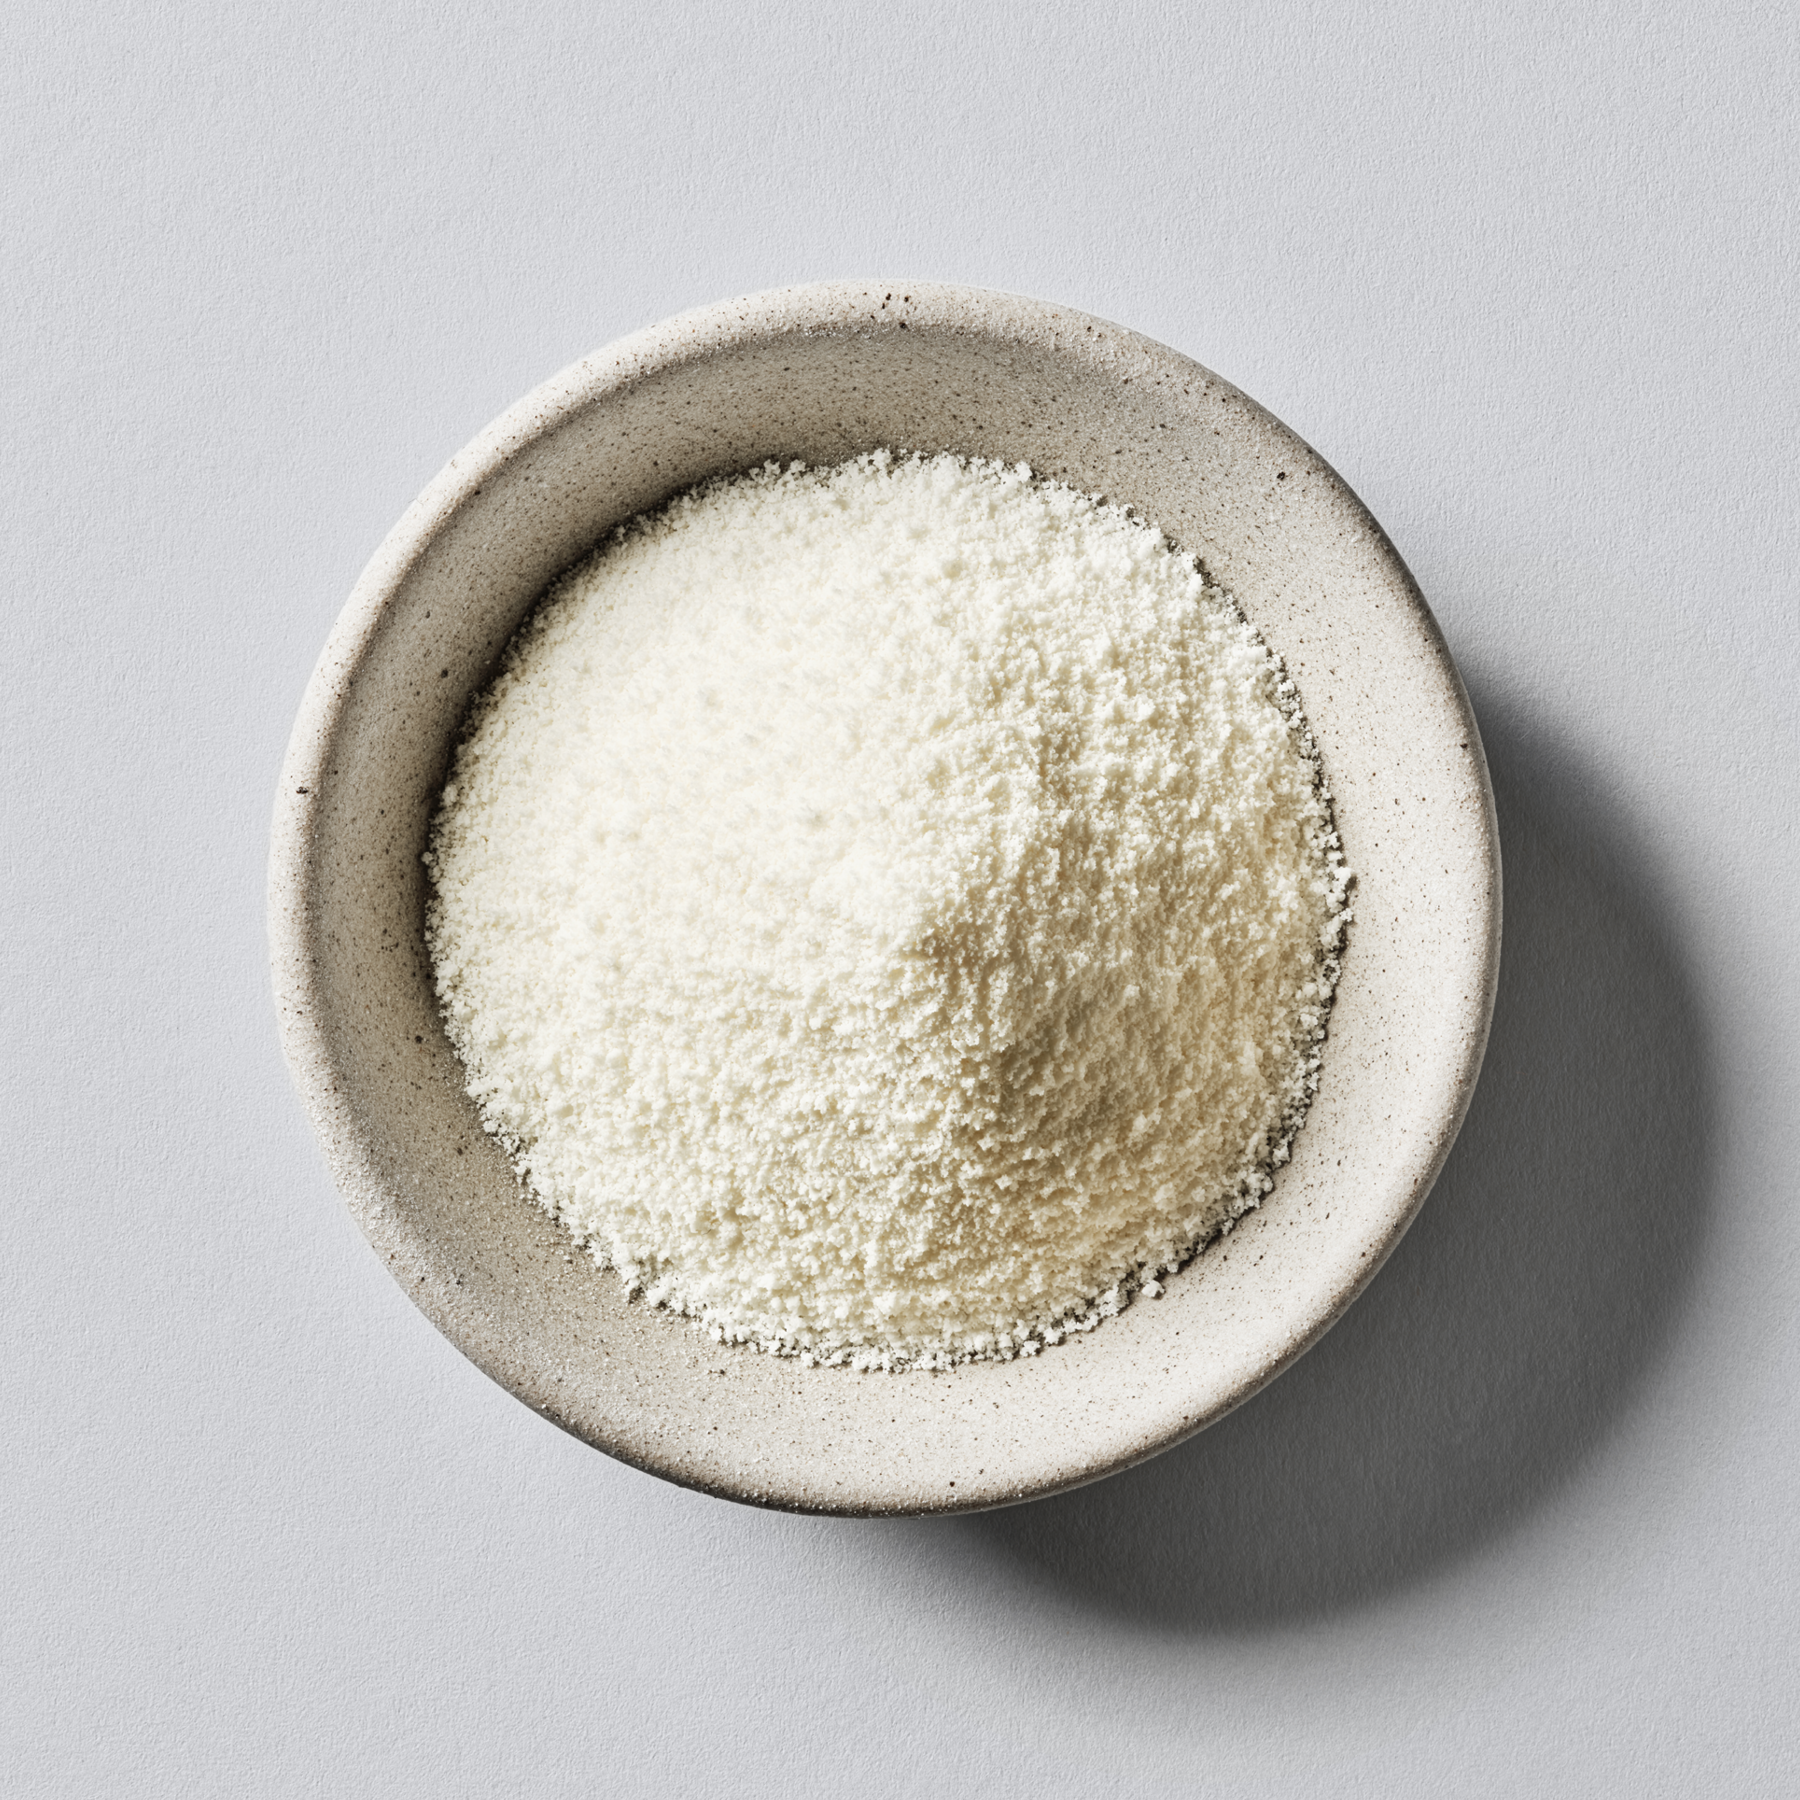 Sports Research Collagen Peptides Hydrolized Gelatin powder in a small ceramic bowl.